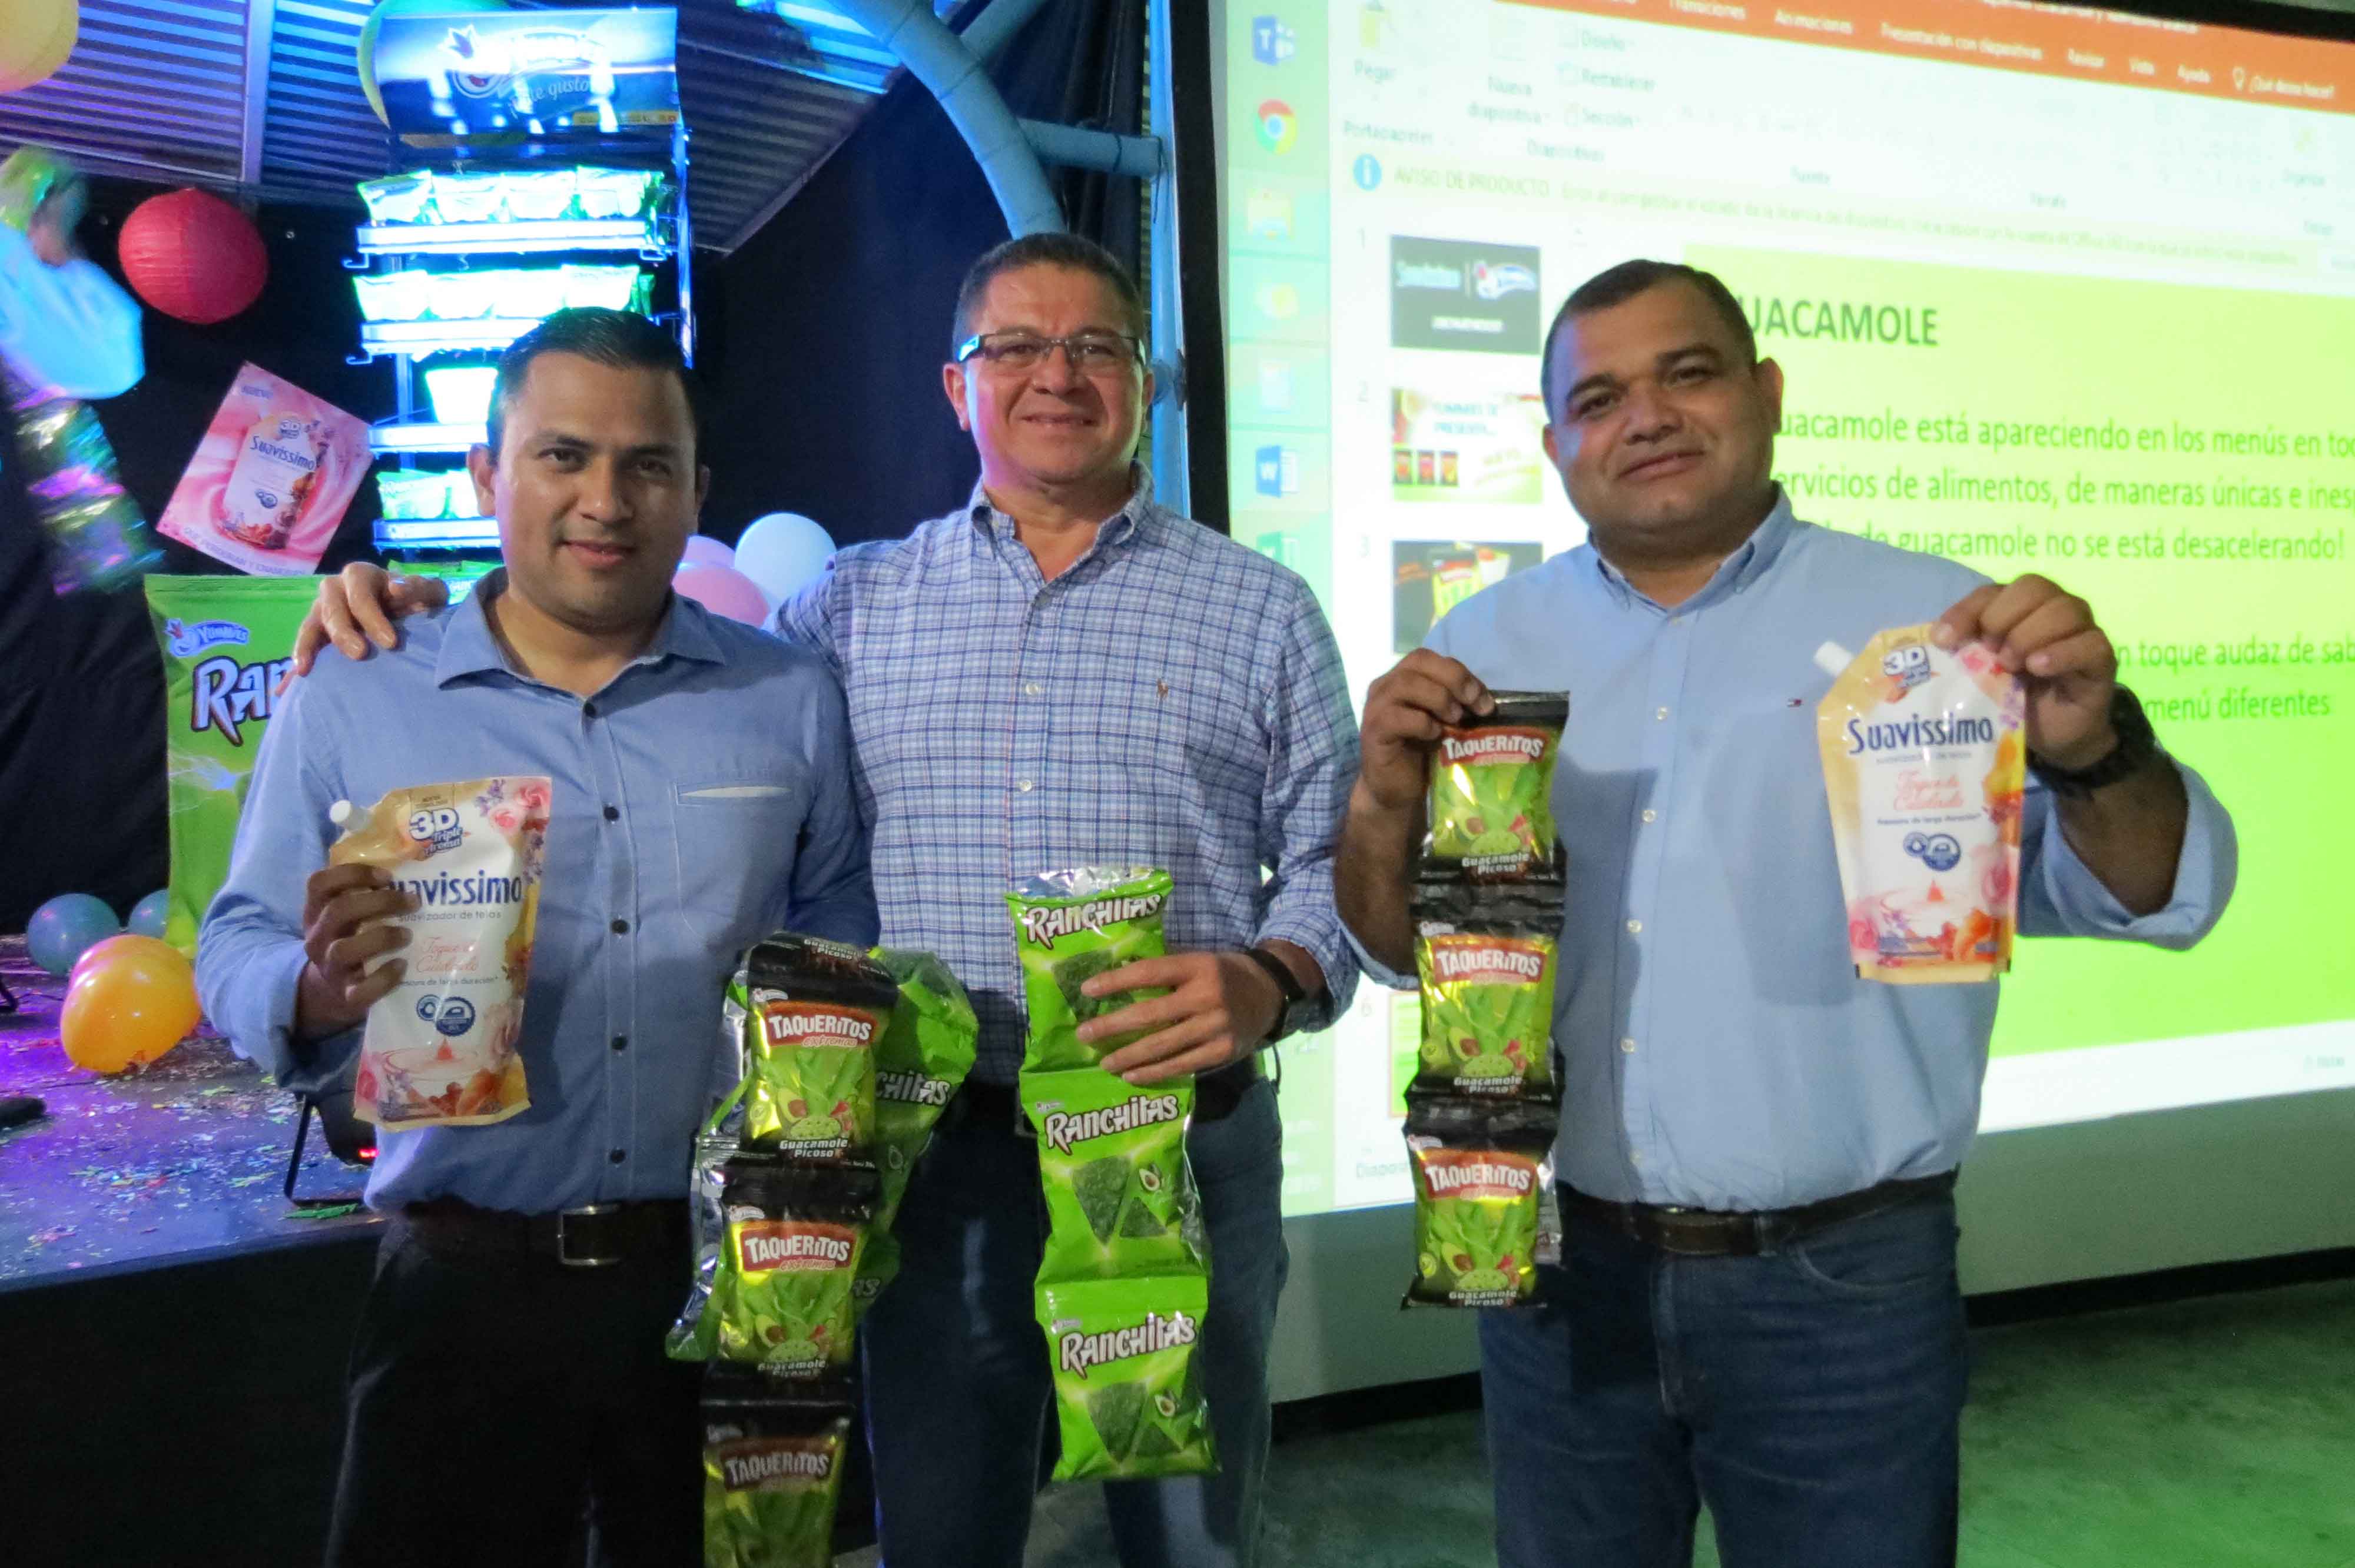 Dinant presents its new products:  Taqueritos Guacamole Picoso, Ranchitas Nacho Guacamole And Suavissimo Touch of Care